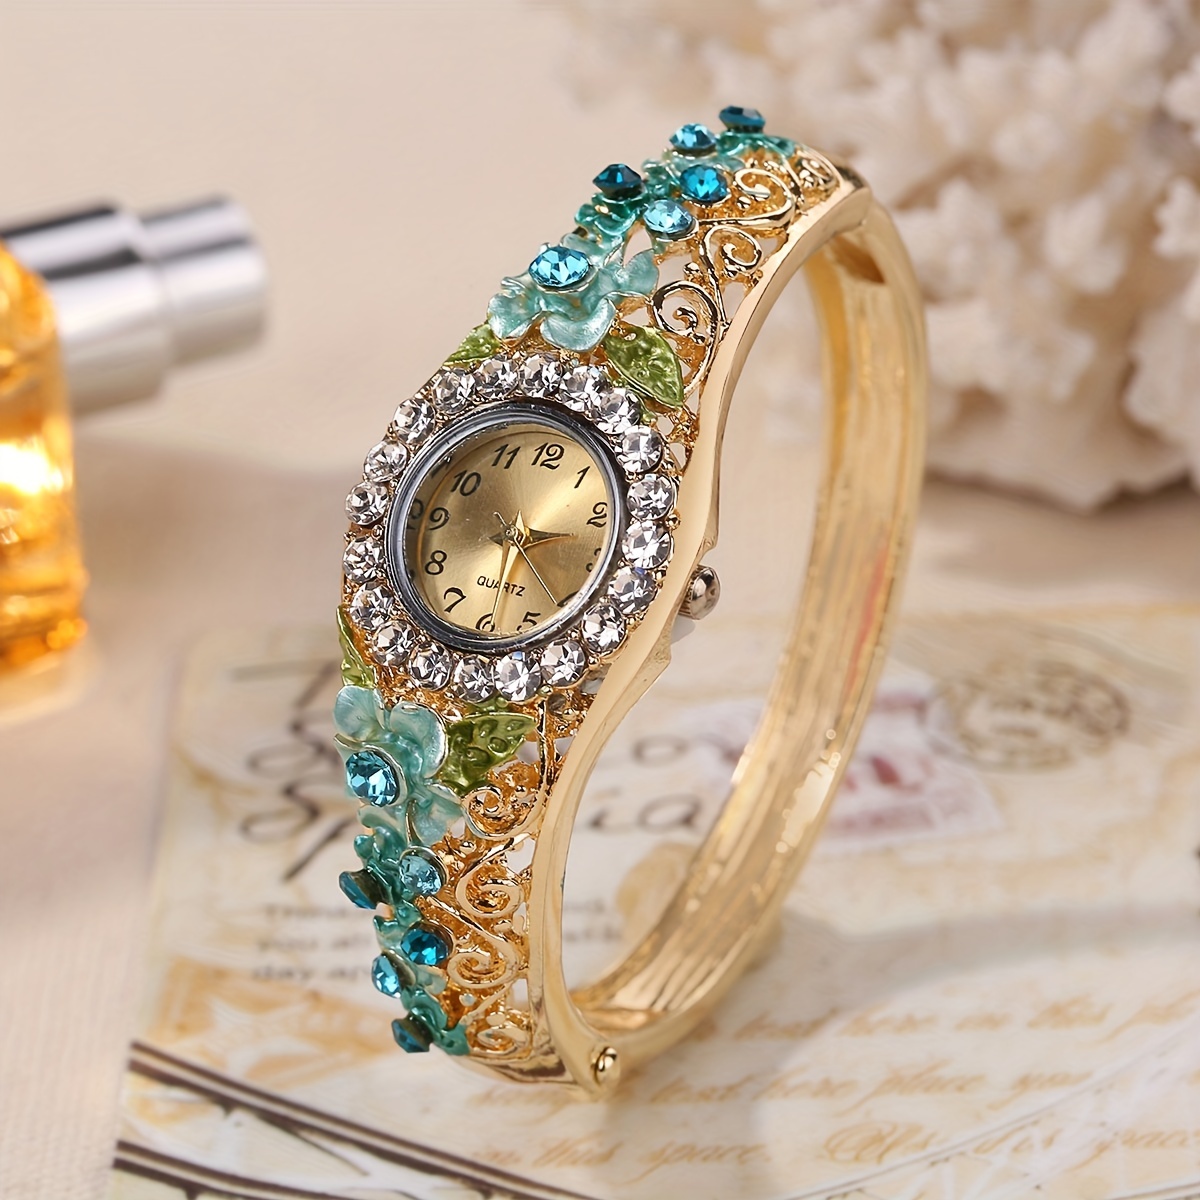 2pcs set womens watch vintage flower quartz bangle watch baroque rhinestone analog wrist watch necklace gift for mom her details 7